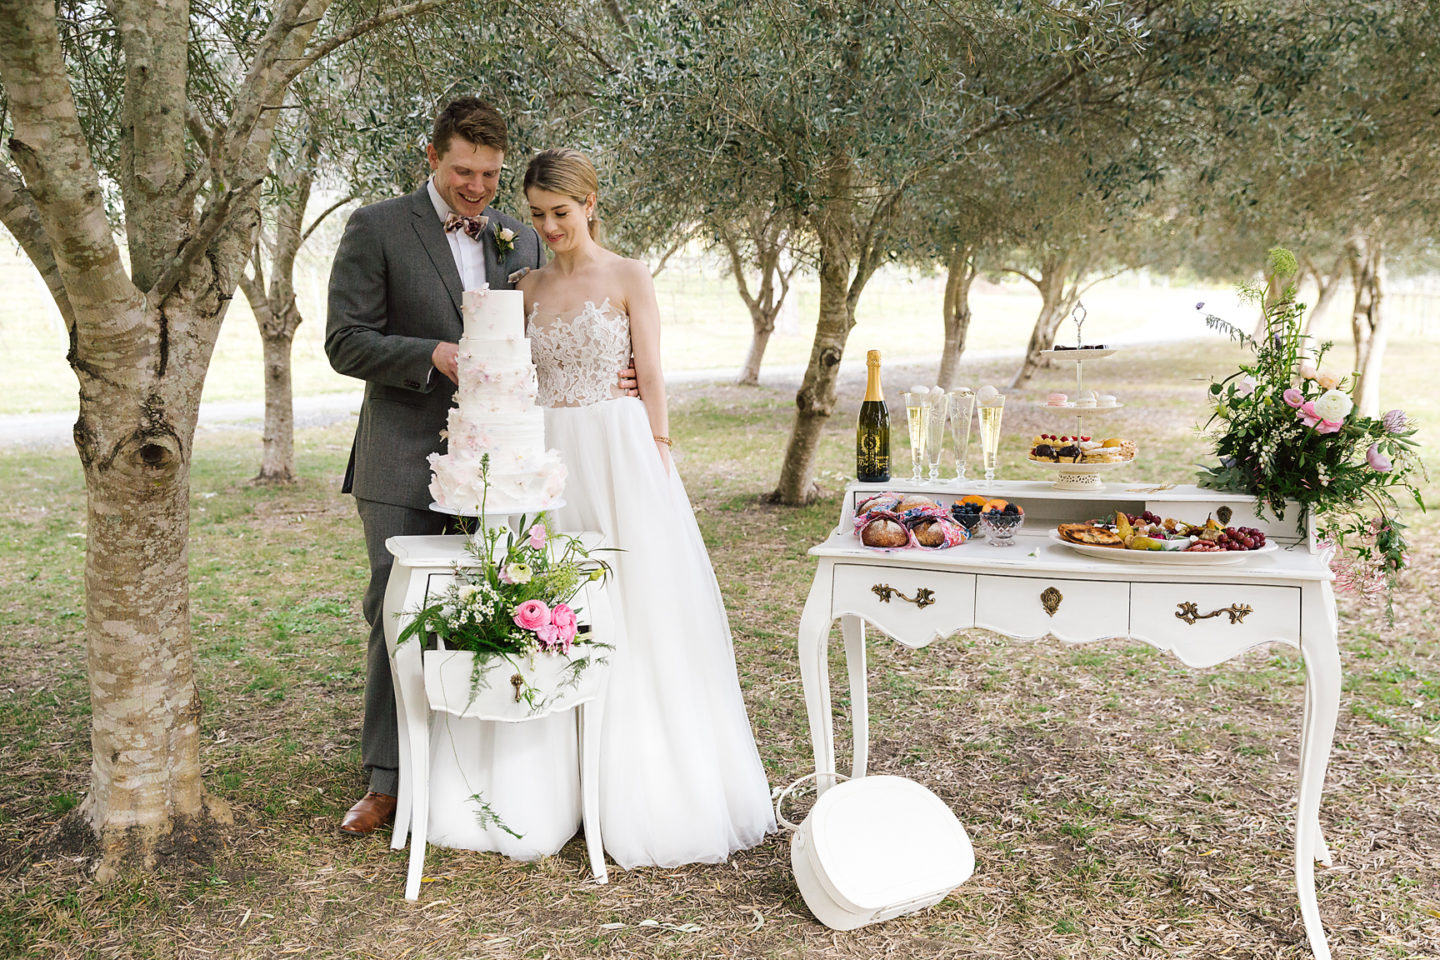 Romantic Vineyard Wedding Inspiration At Sarabah Estate Winery, Australia